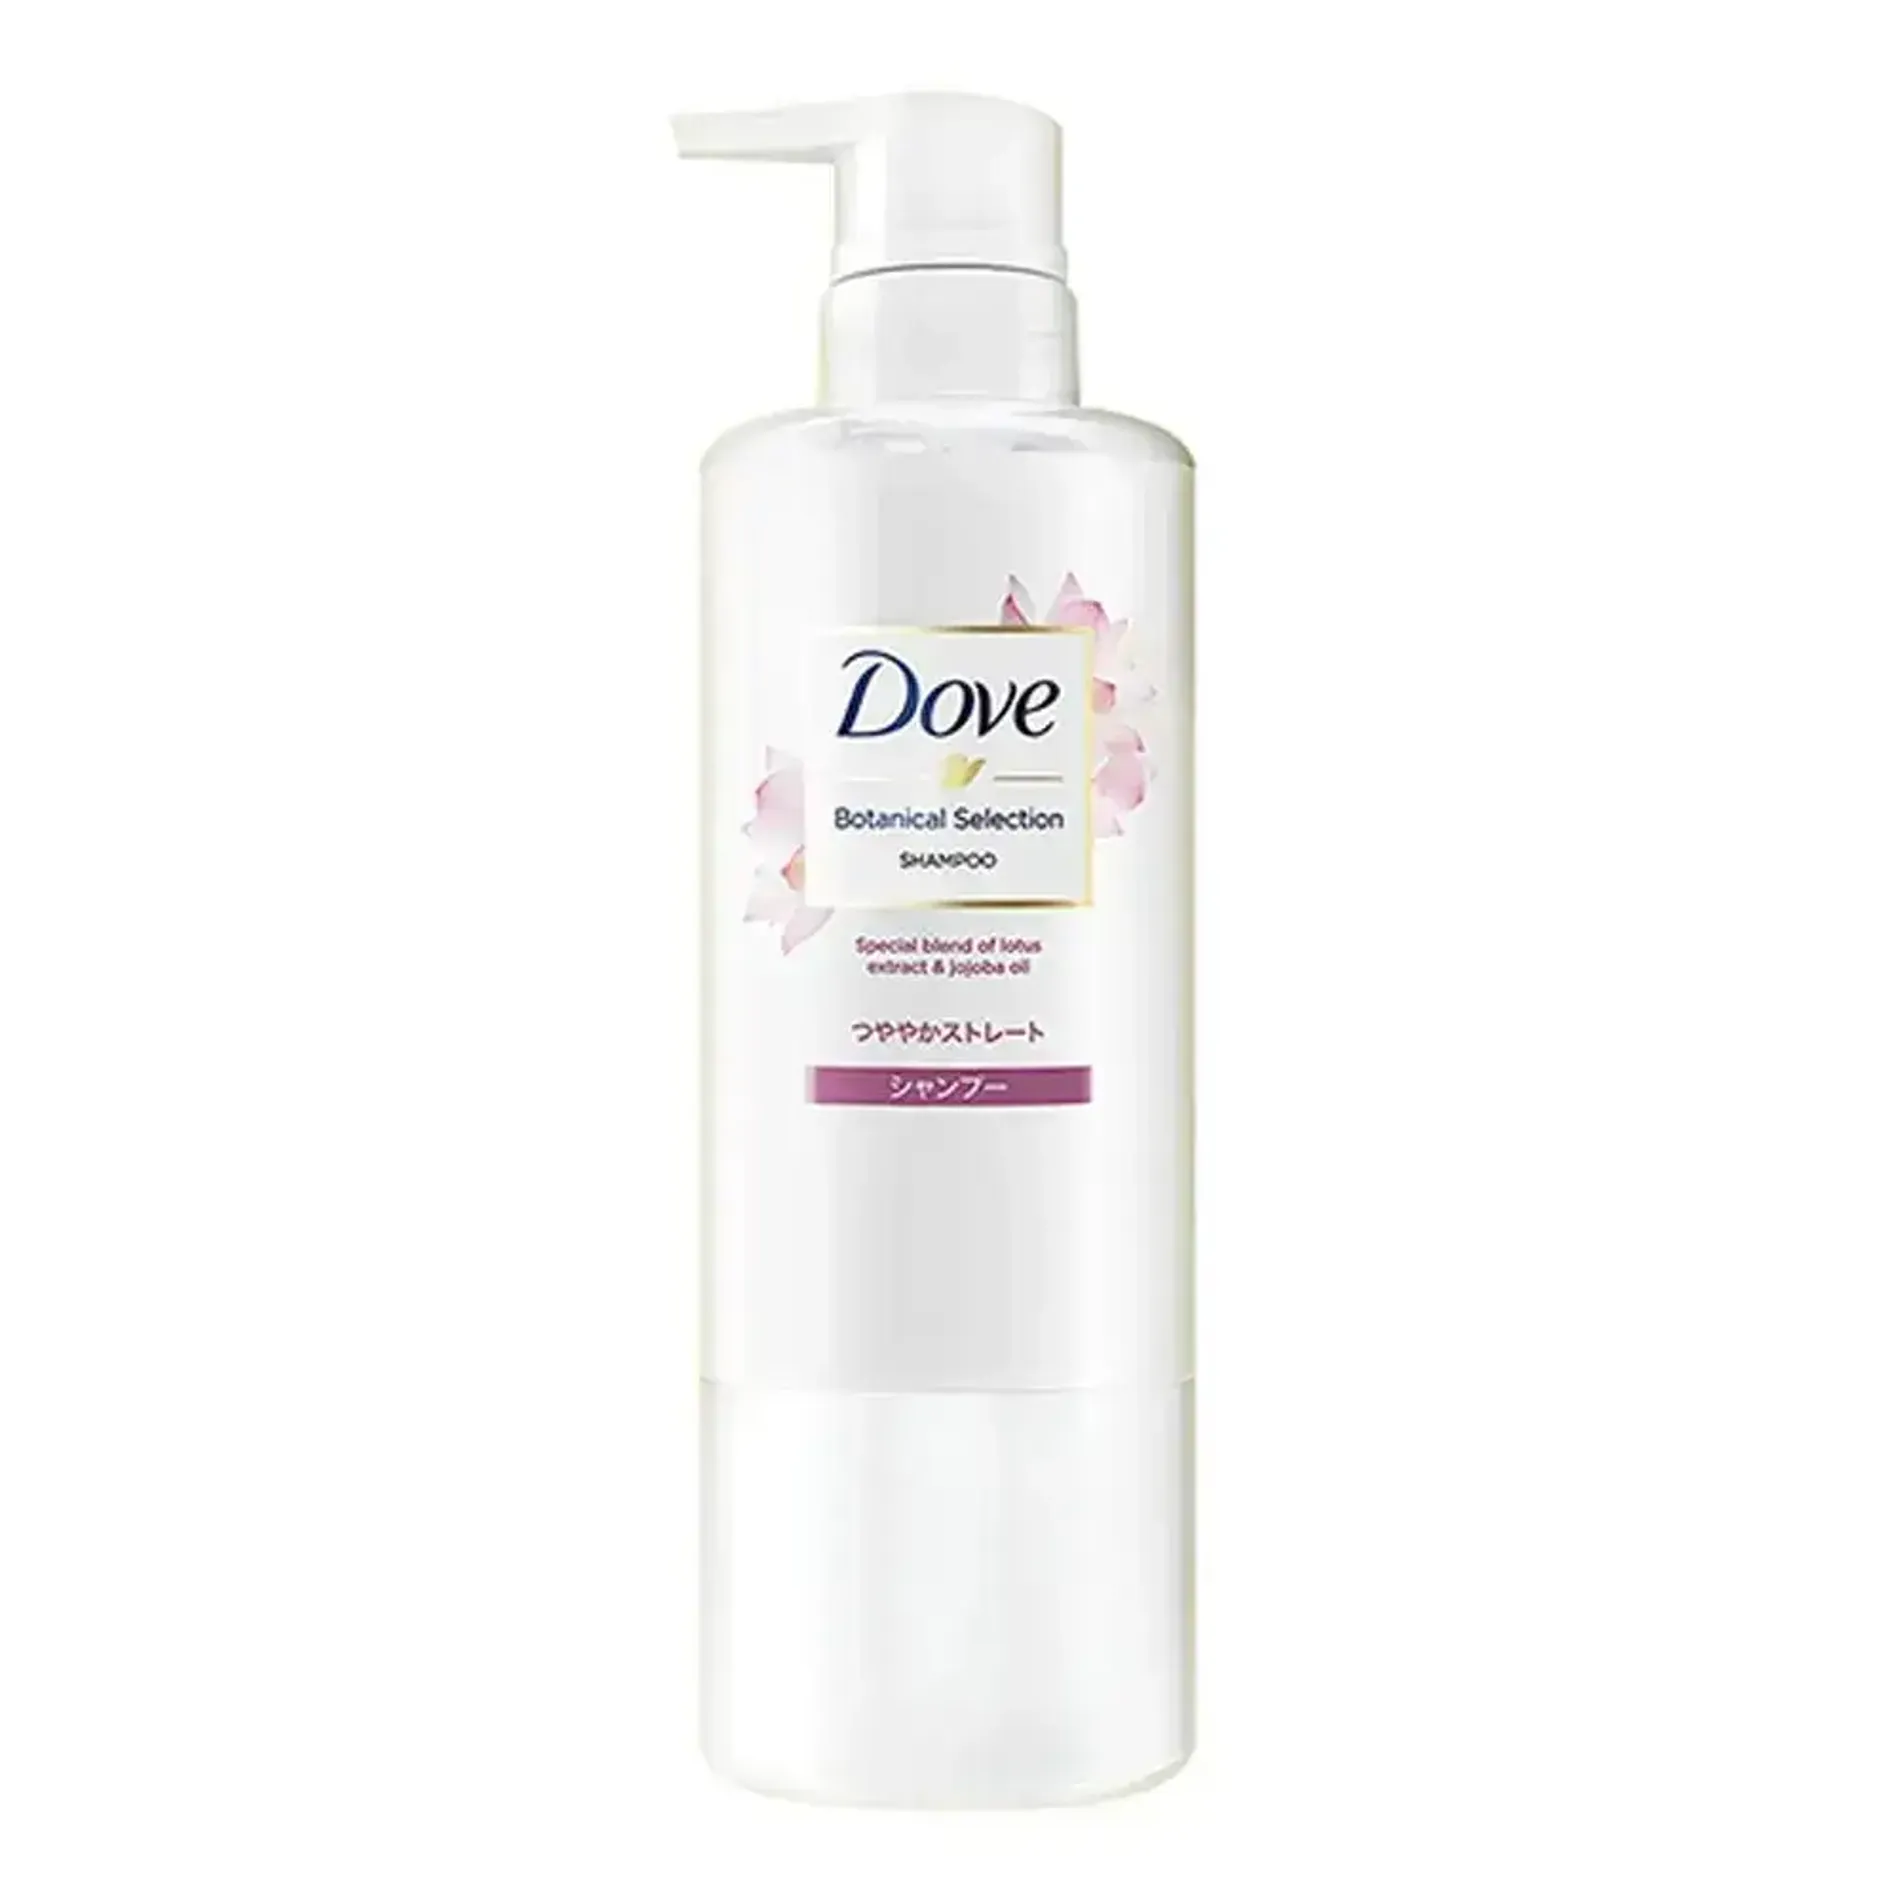 dau-goi-giup-toc-bong-muot-tu-hoa-sen-dau-jojoba-dove-botanical-selection-shampoo-500g-1